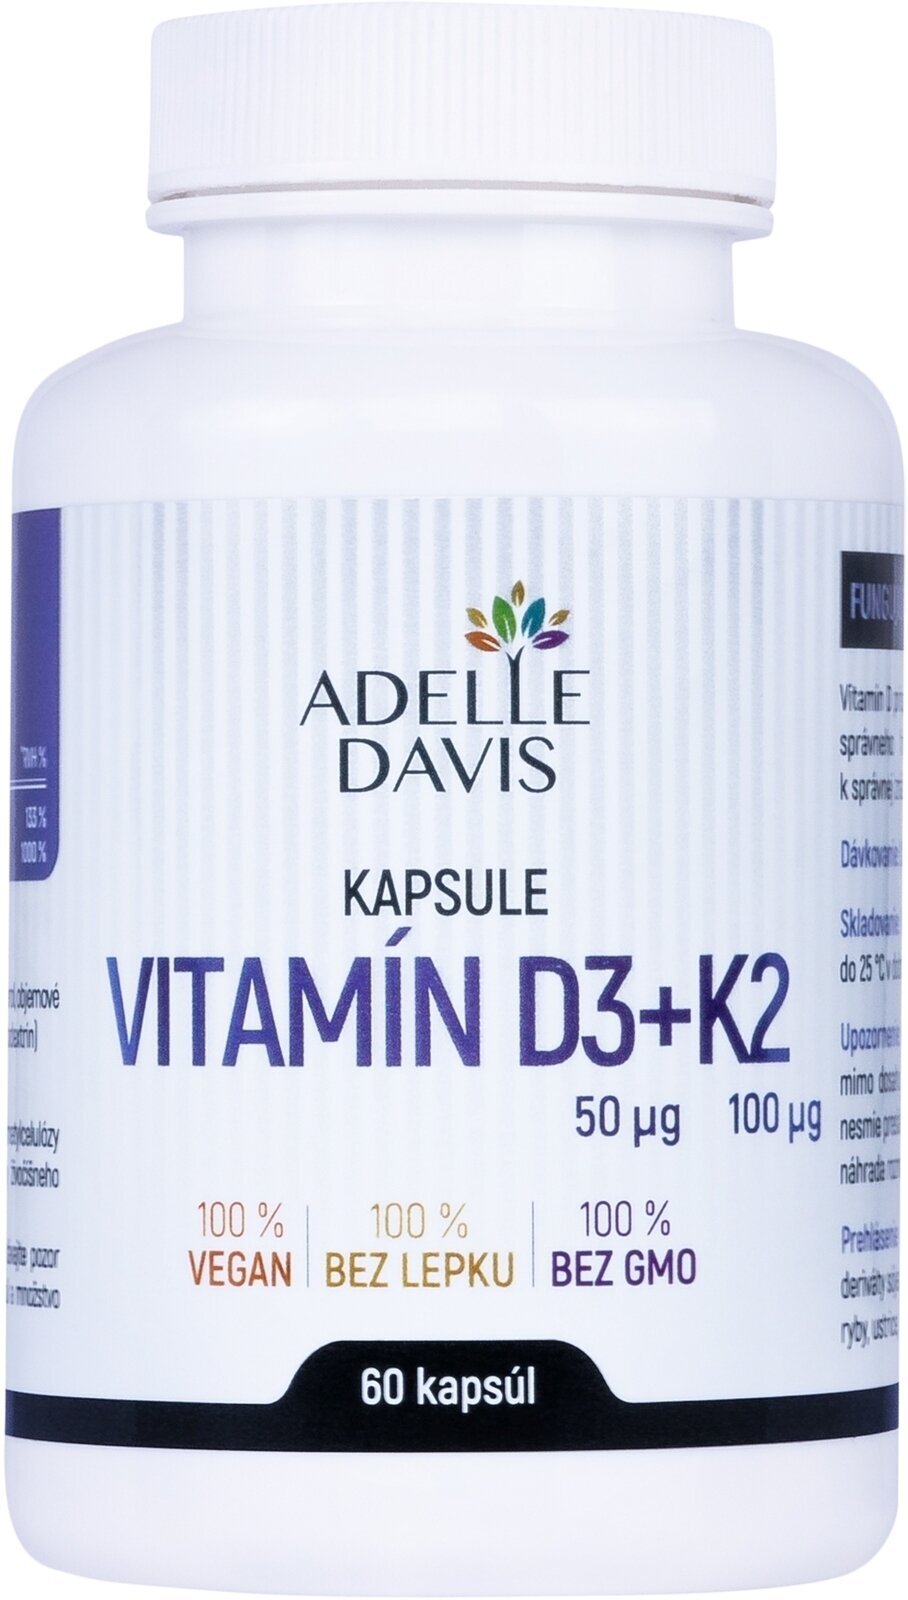 Vitamina D Adelle Davis Vitamin D3 + K2 60 Capsules Vitamina D